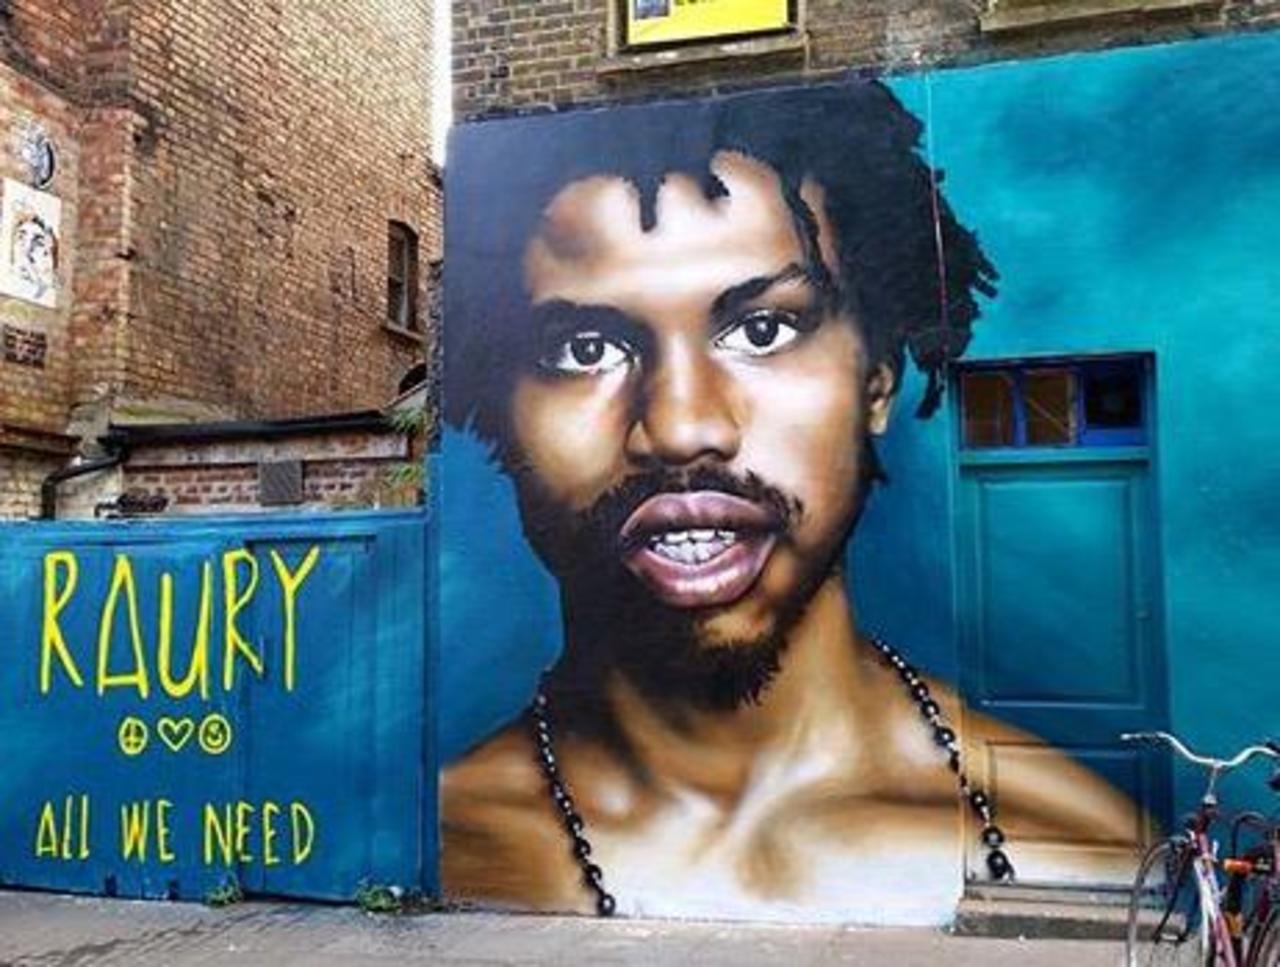 New Street Art of Raury by Olliver Switch in Brick Lane 

#art #graffiti #mural #streetart http://t.co/6p87ieolJA